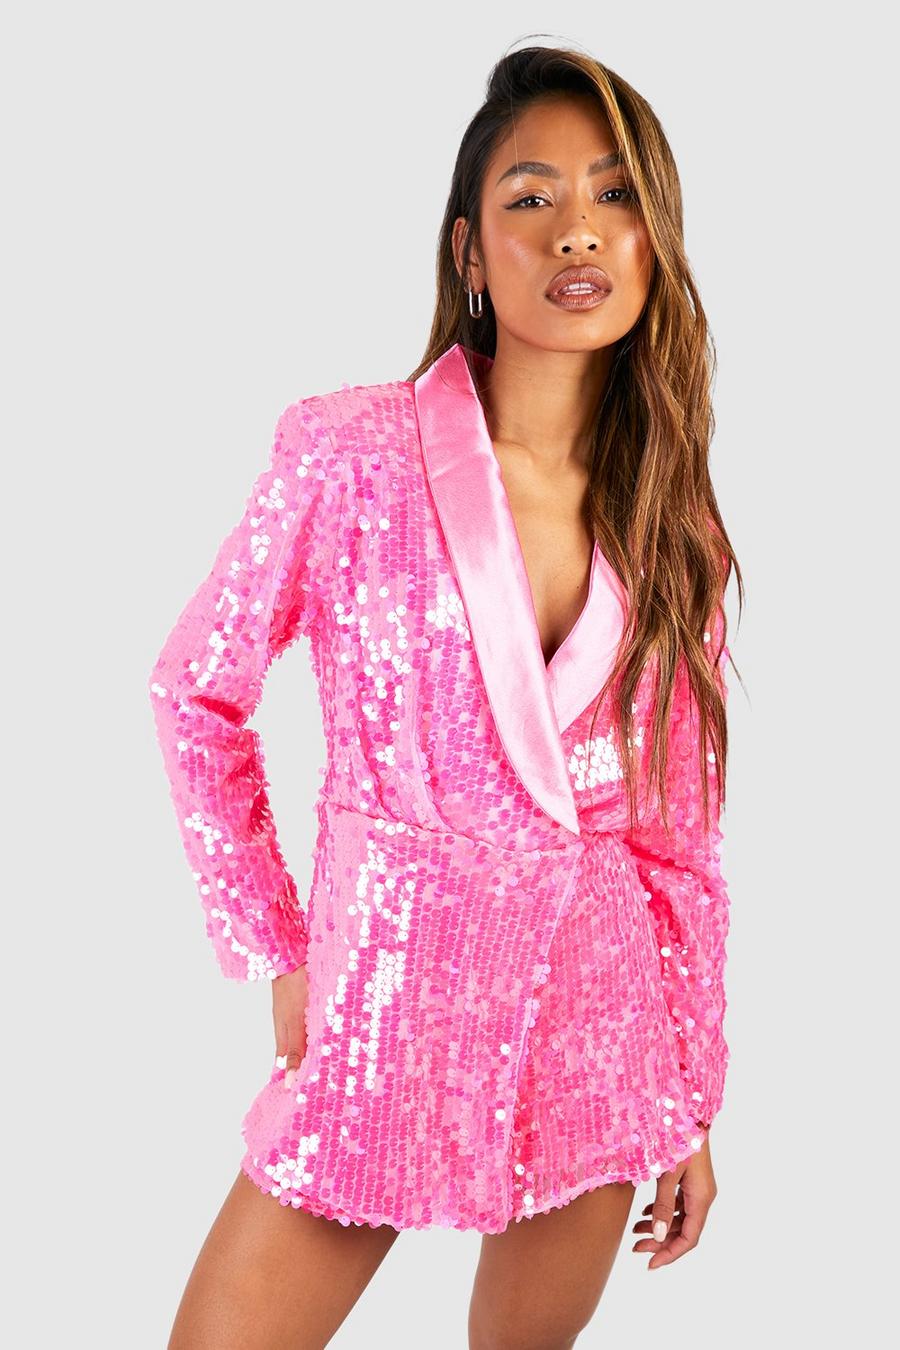 Hot pink Sequin Blazer Playsuit